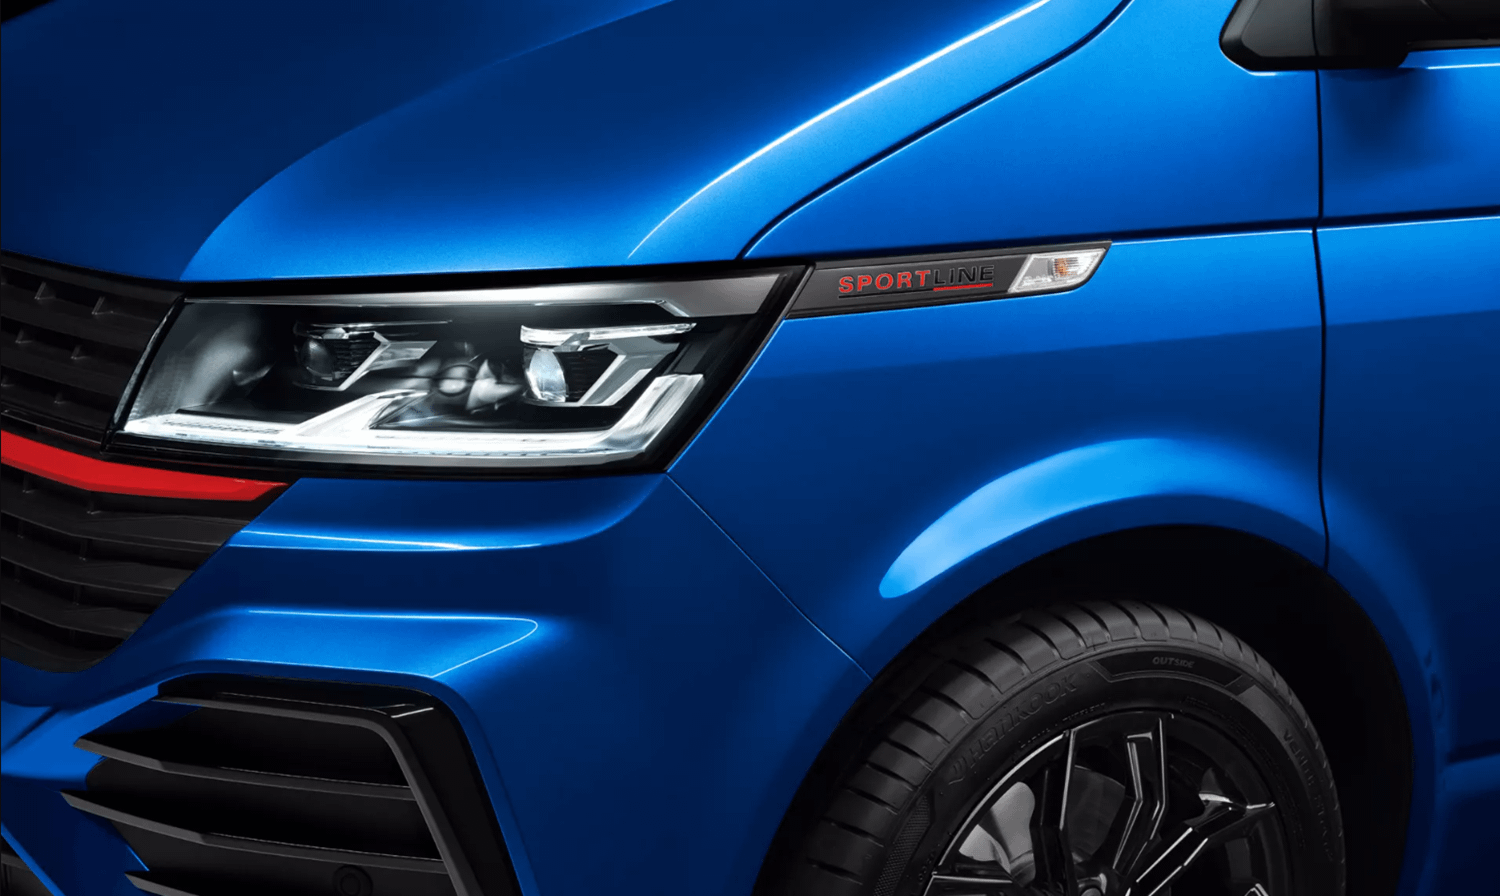 Blue New Volkswagen Transporter Sportline headlights